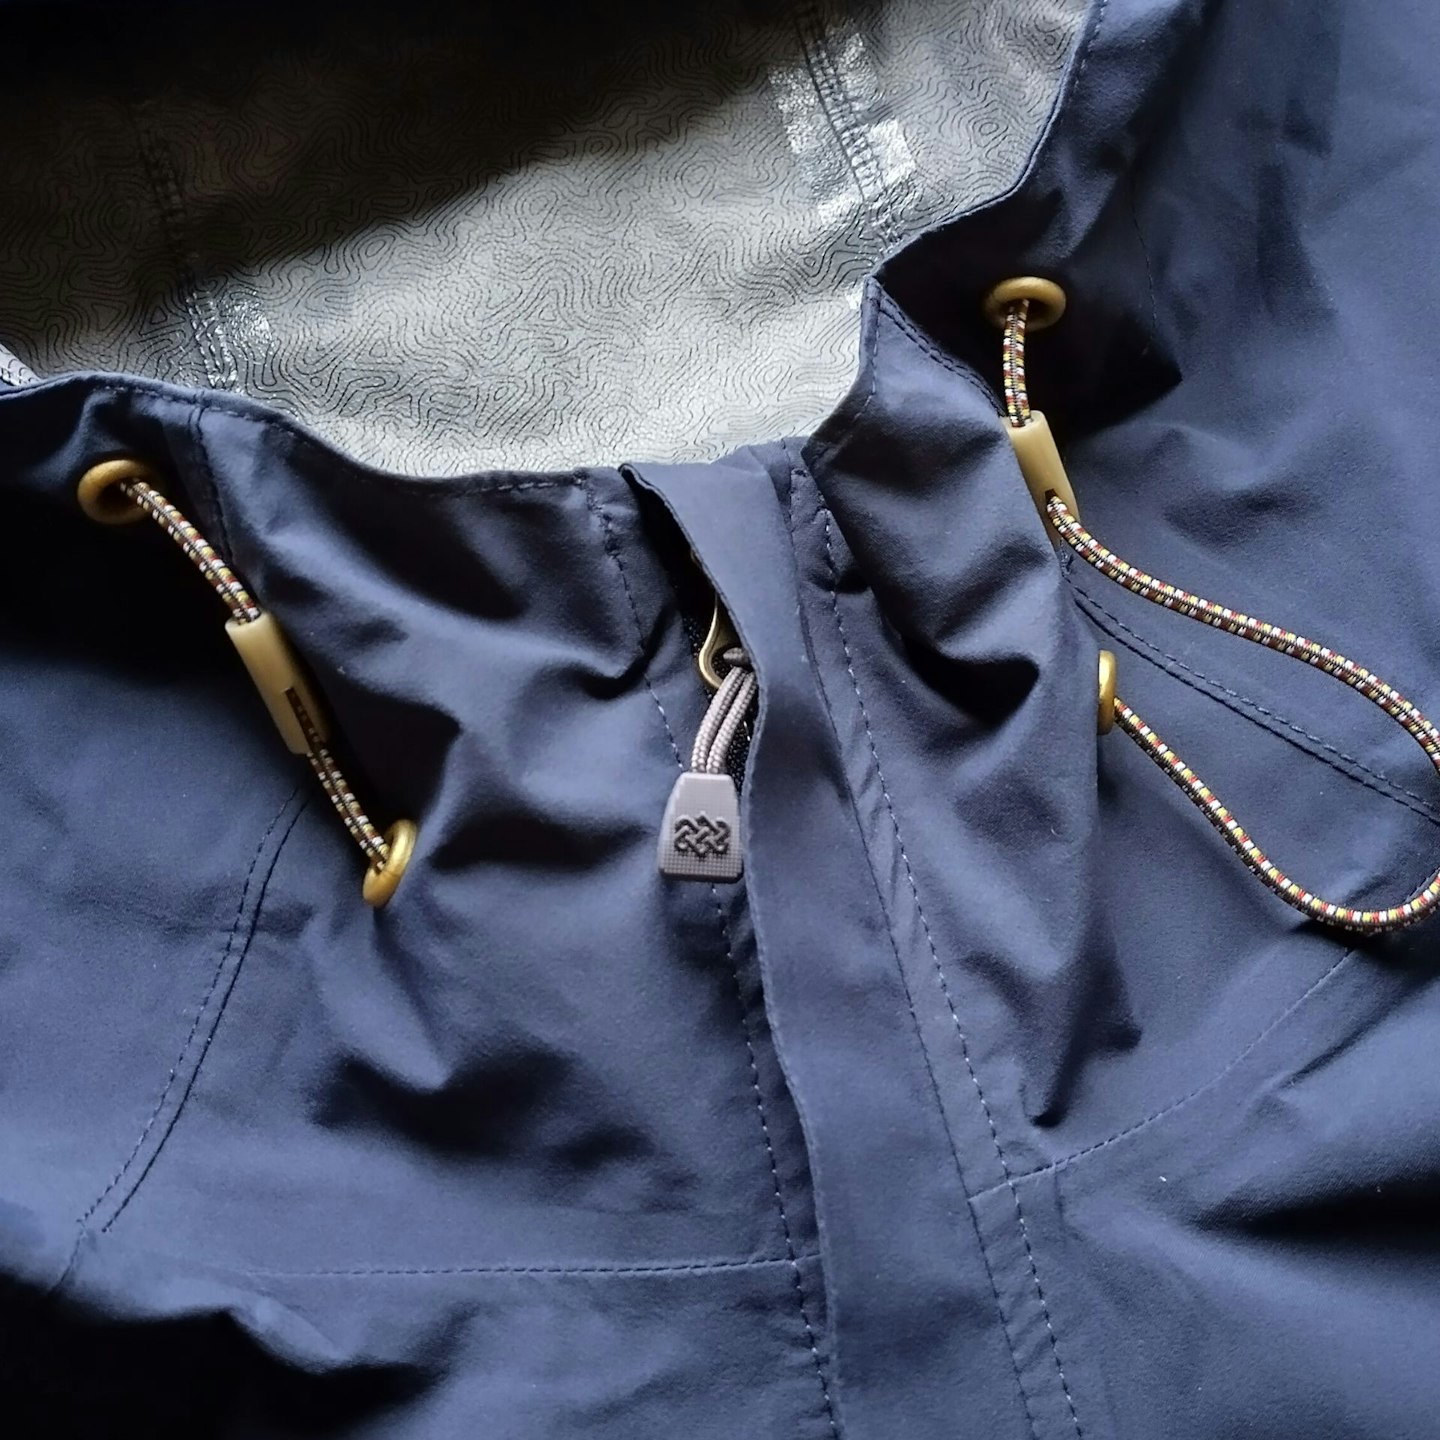 Sherpa Adventure Gear Nima 2.5-Layer Jacket collar and hood toggles